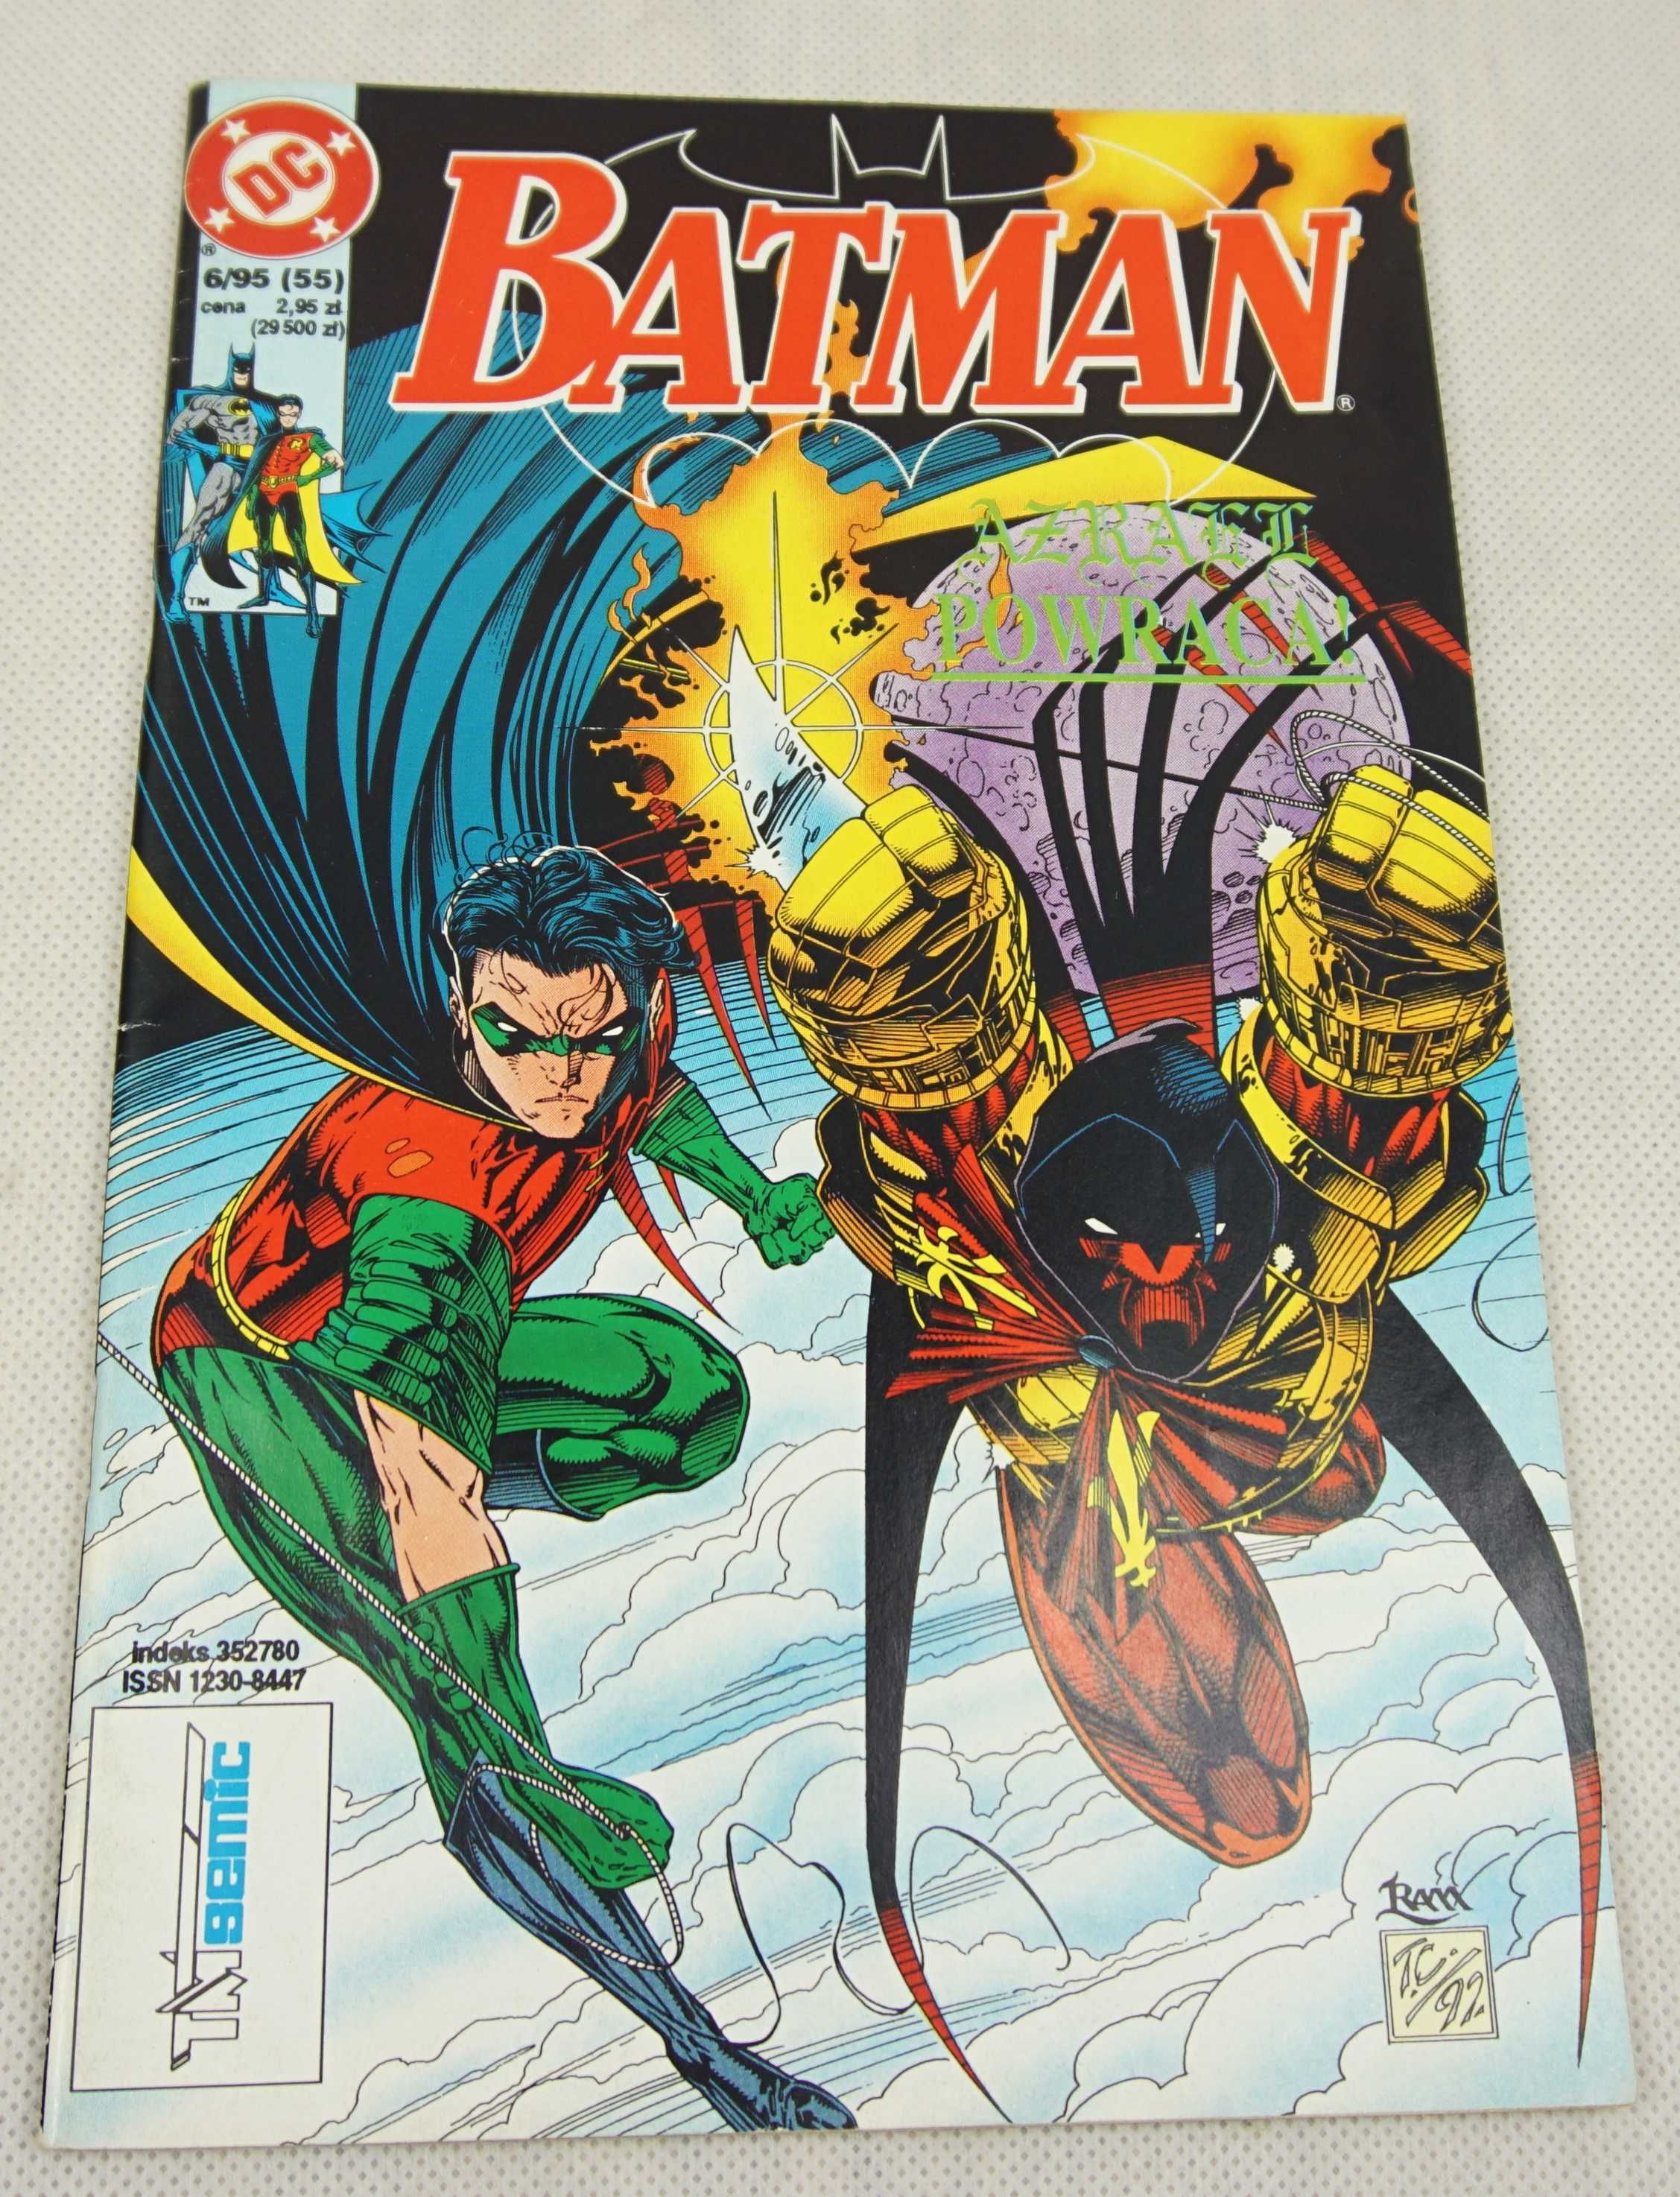 Komiks Batman 6/95